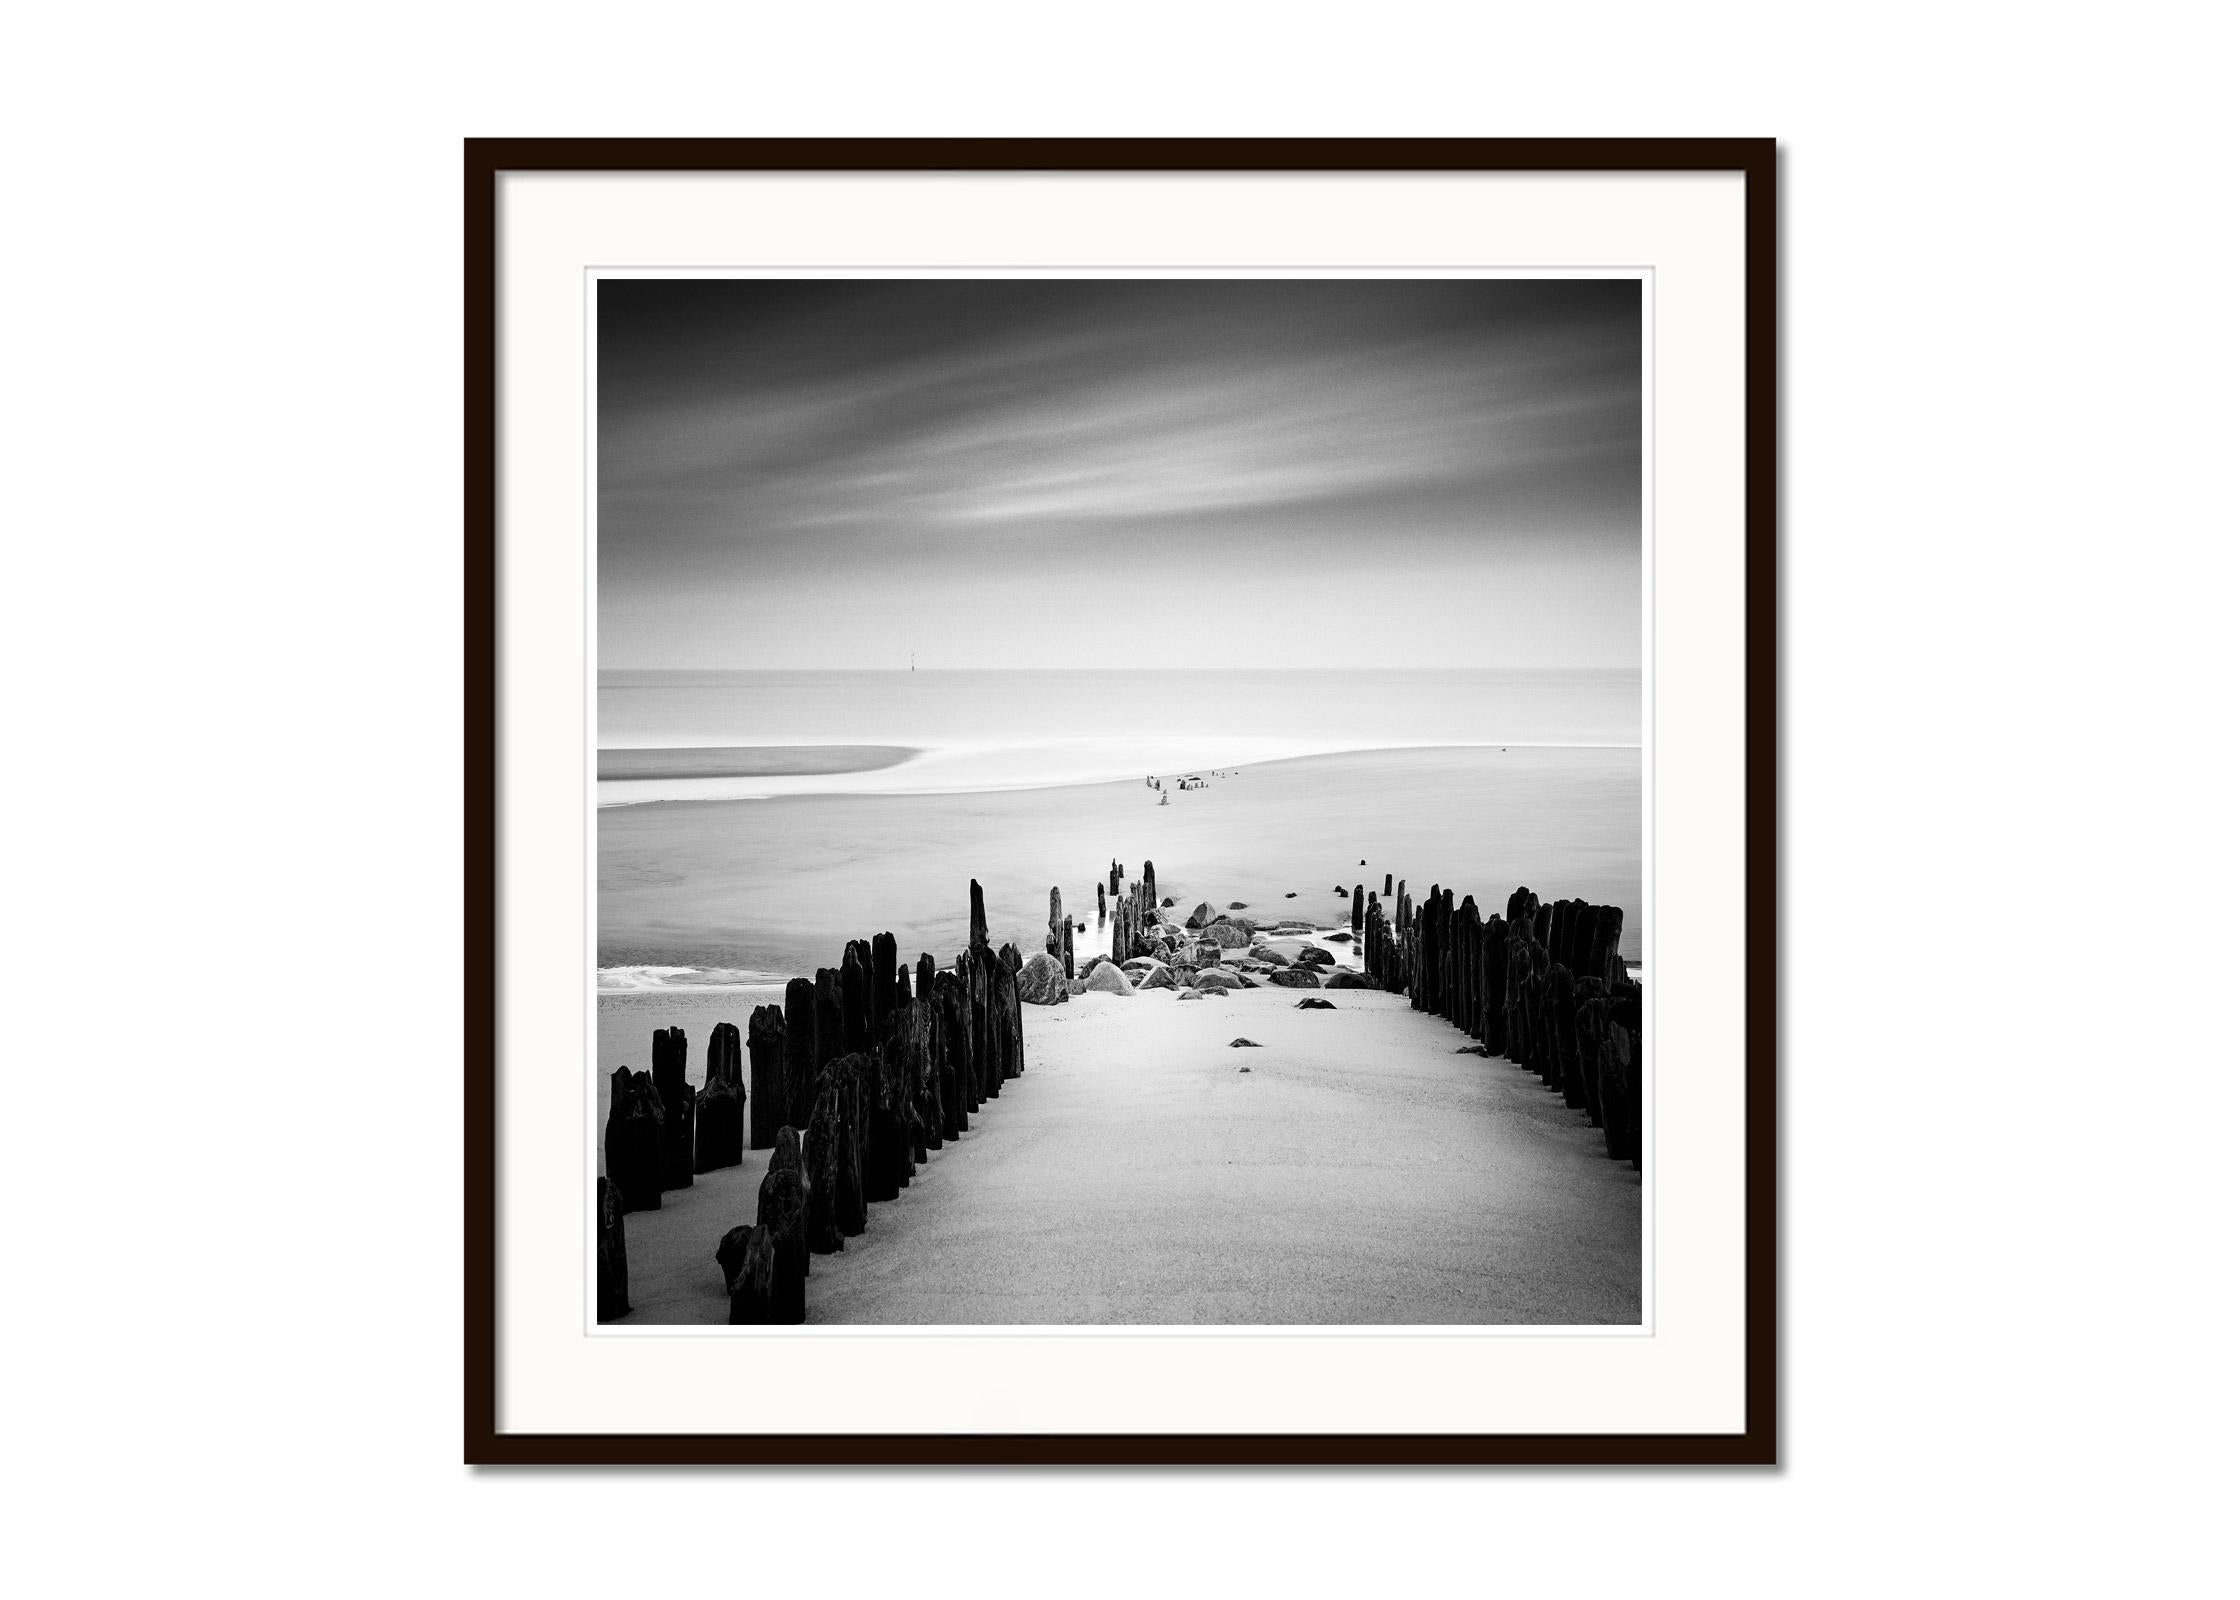 Groyne, Wavebreaker, Beach, Sylt, Germany, black & white waterscape photo print - Gray Landscape Photograph by Gerald Berghammer